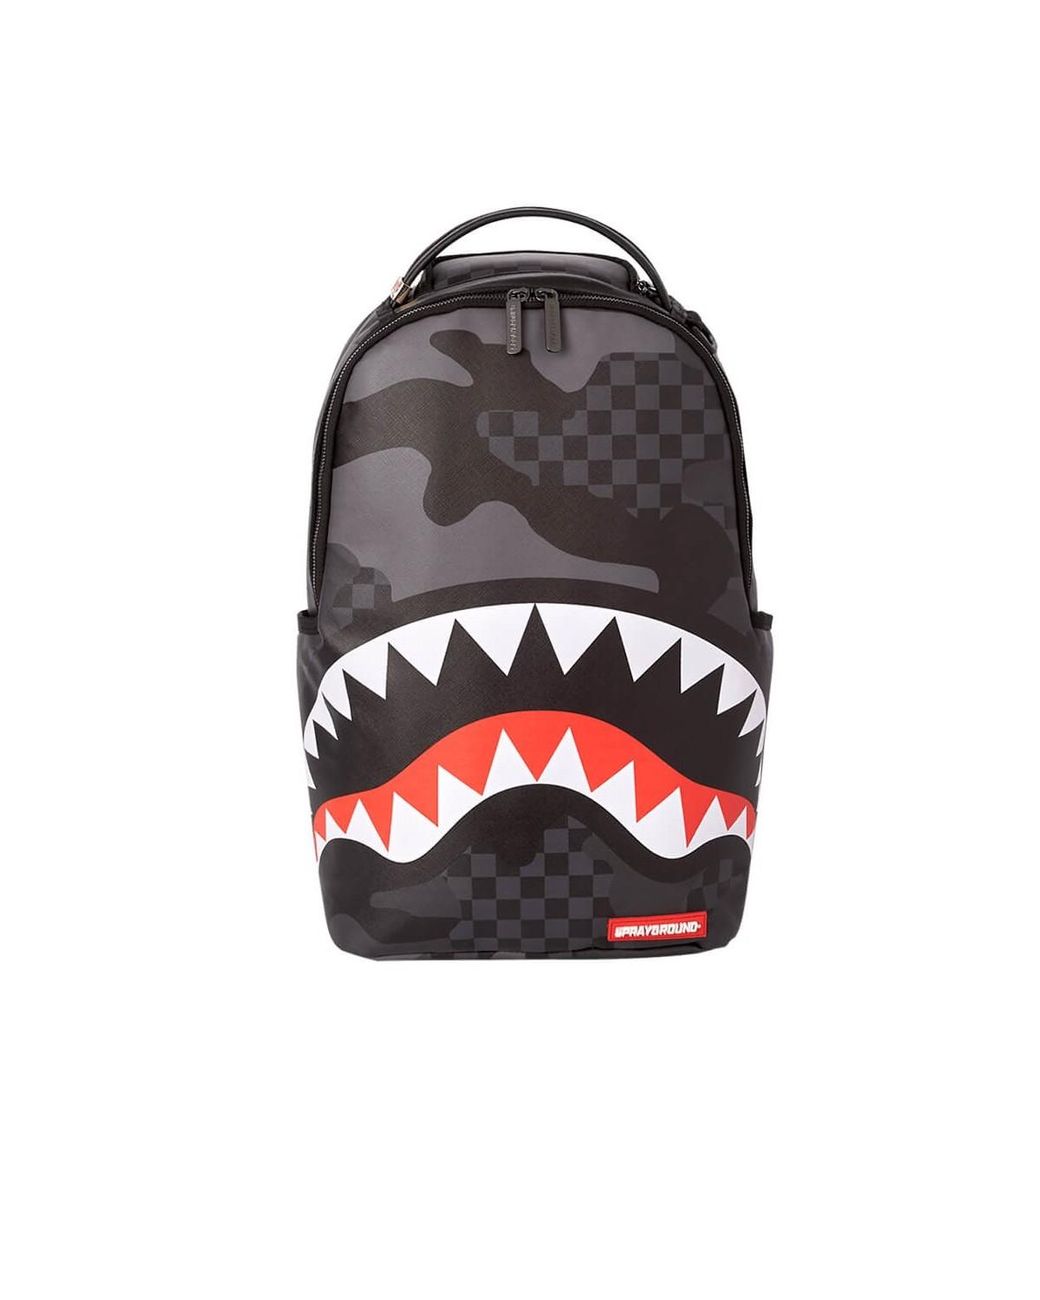 Mochila personalizada Black Camo Lauren, bolso de mochila para